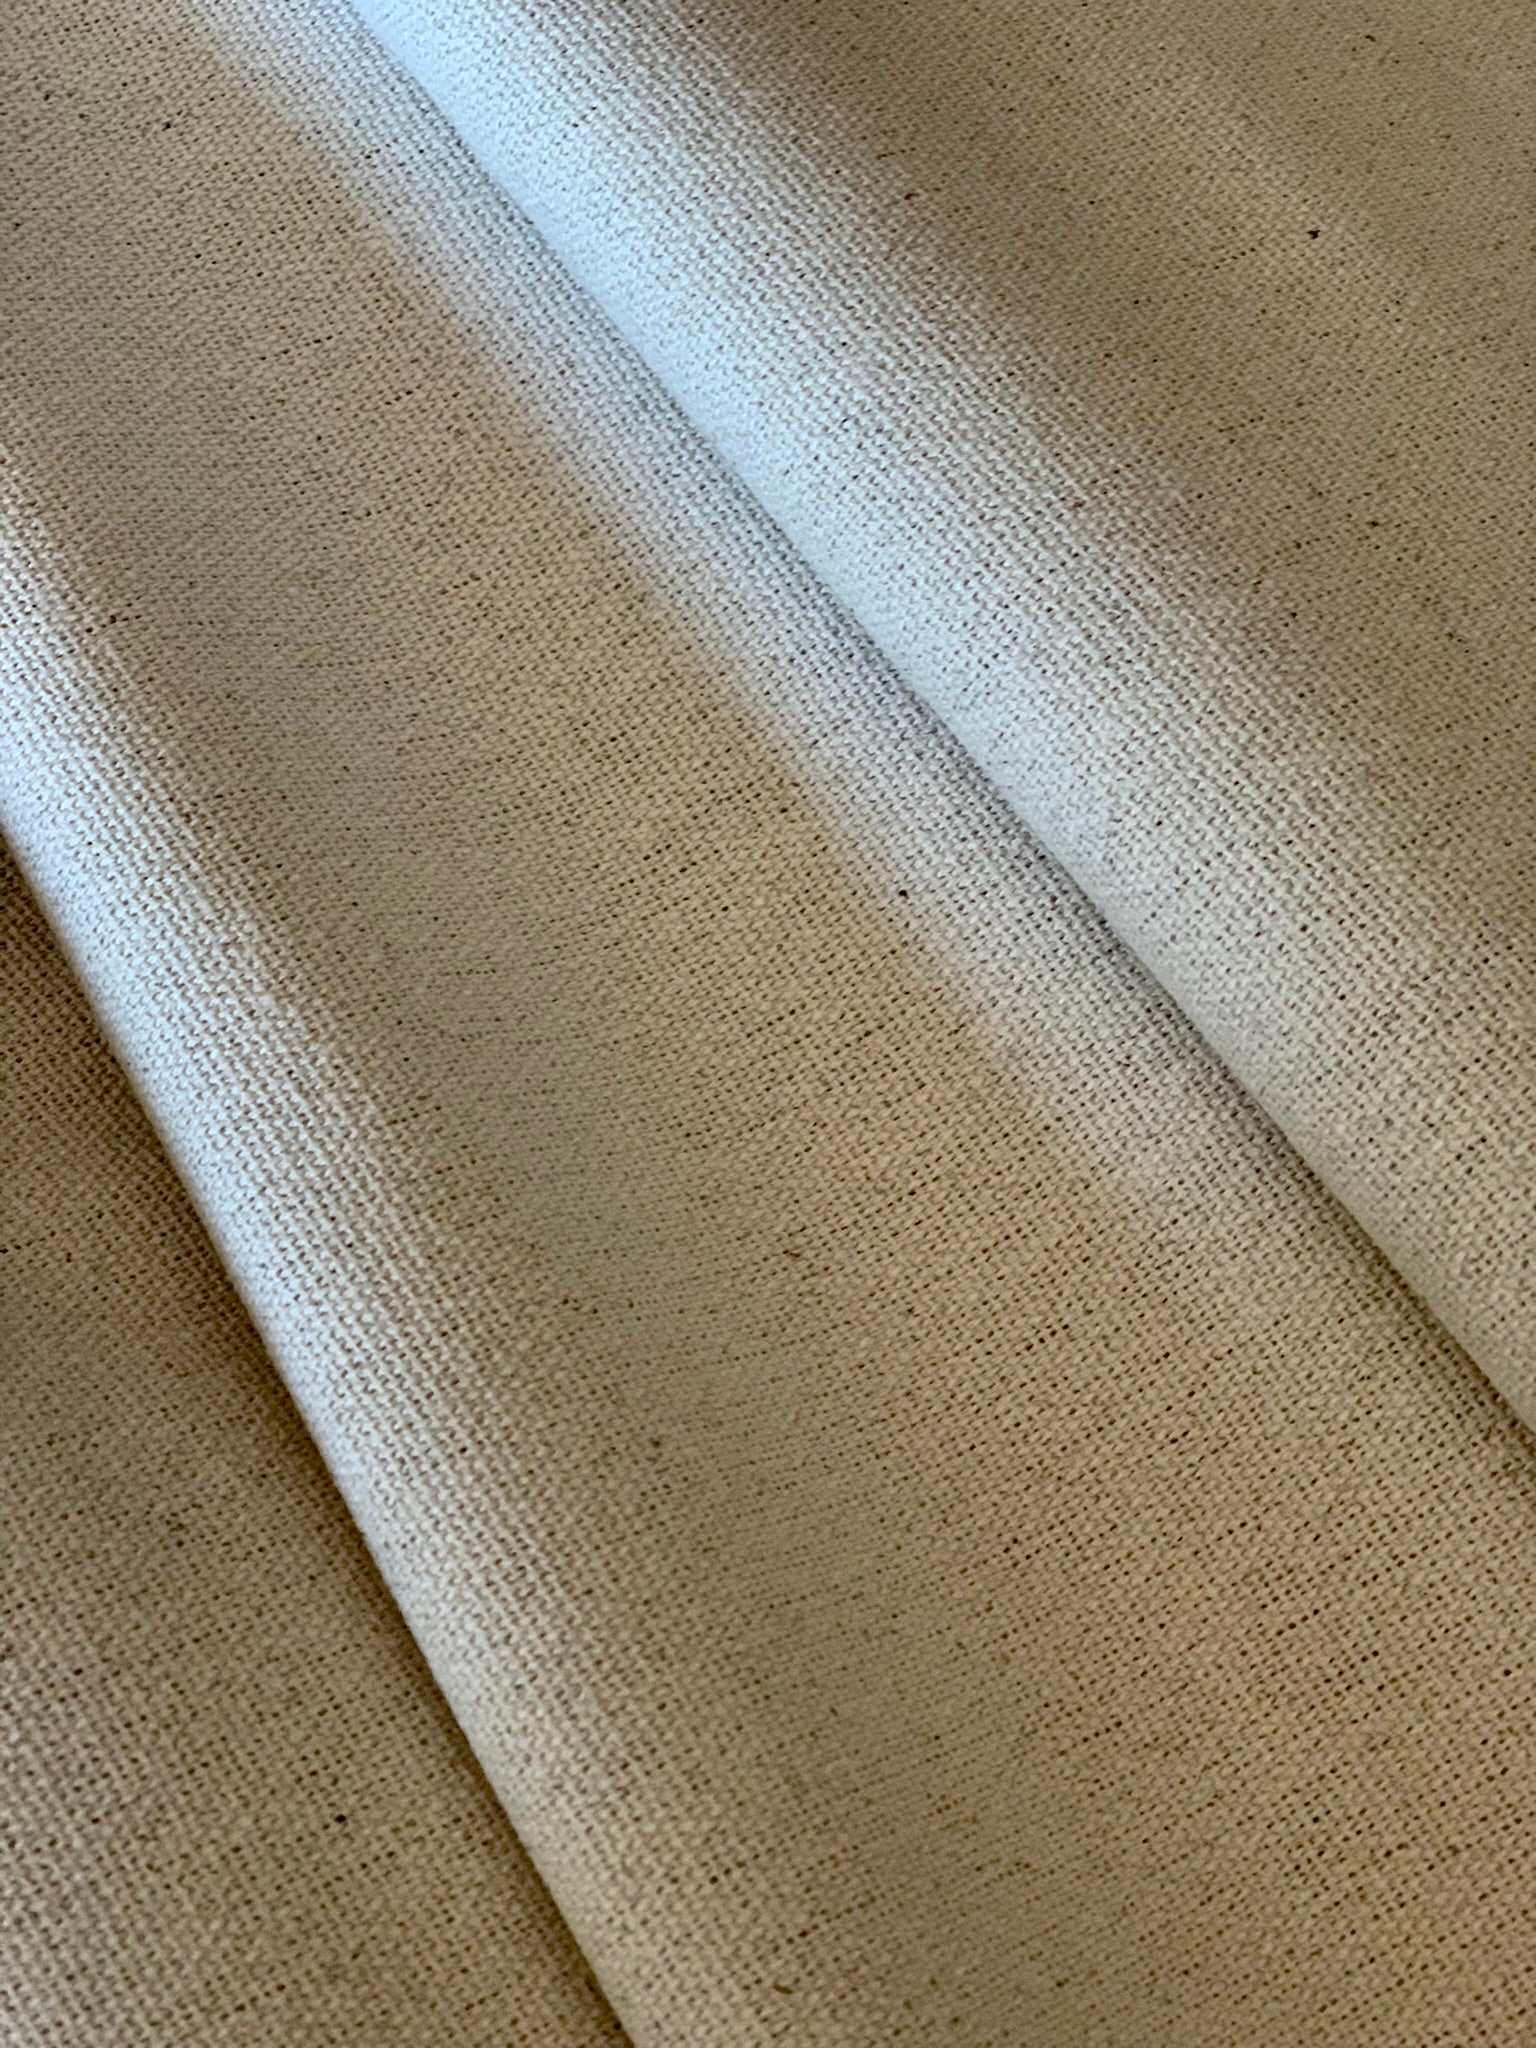 Grain Sack Fabric - Plain Cream